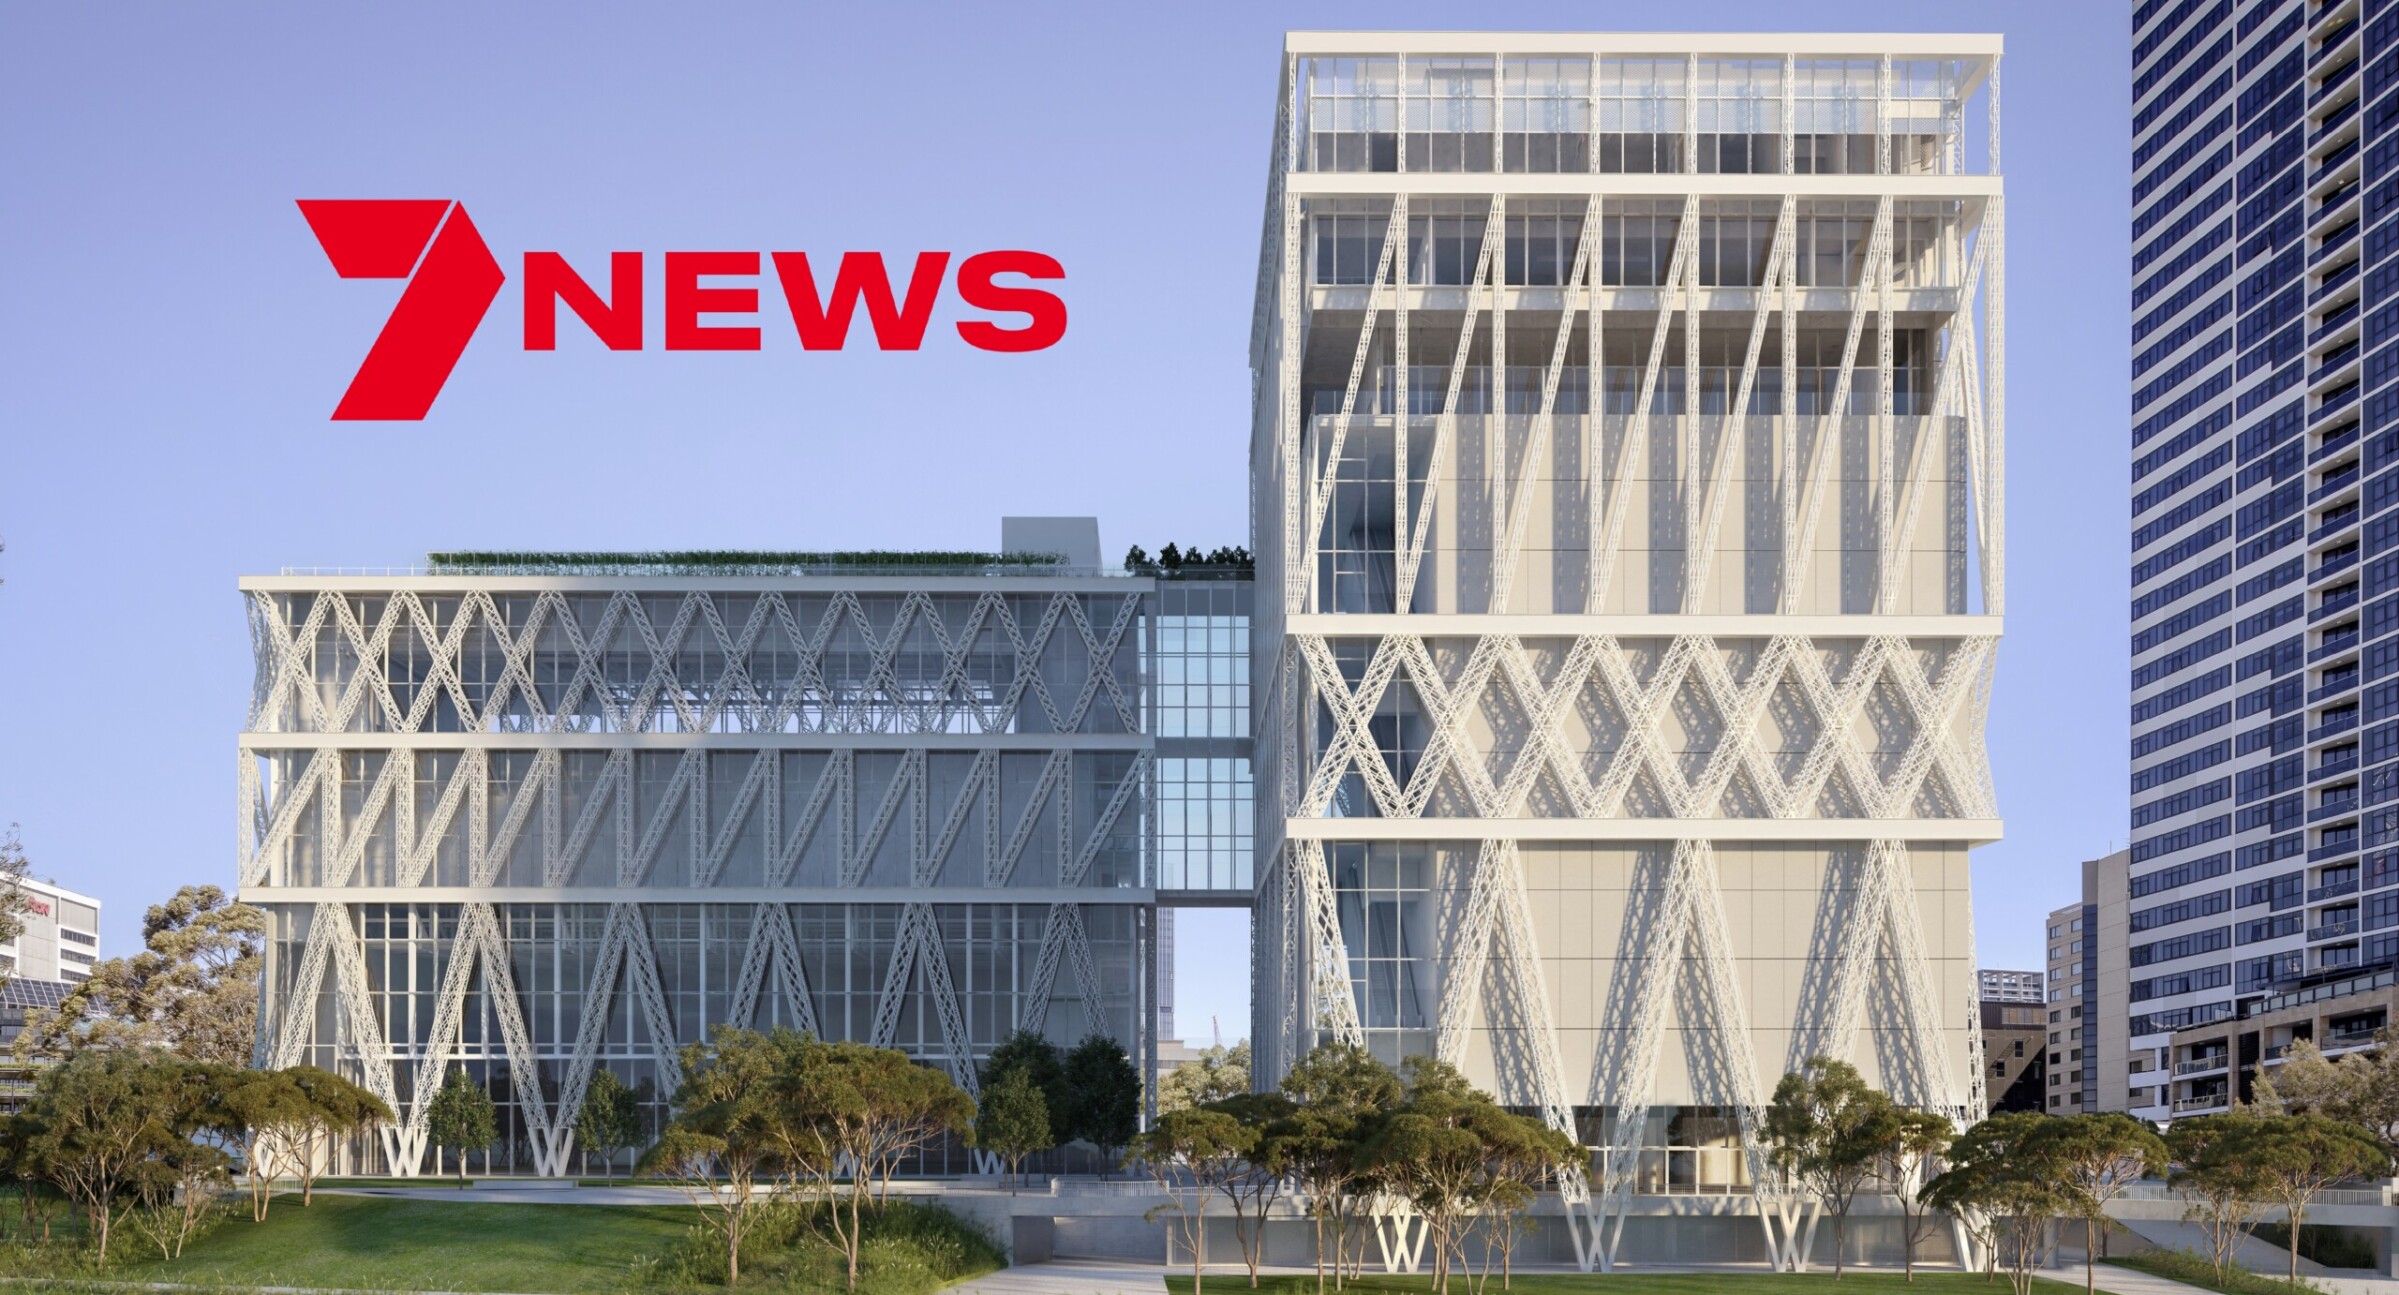 7News highlights ongoing construction at Powerhouse Parramatta